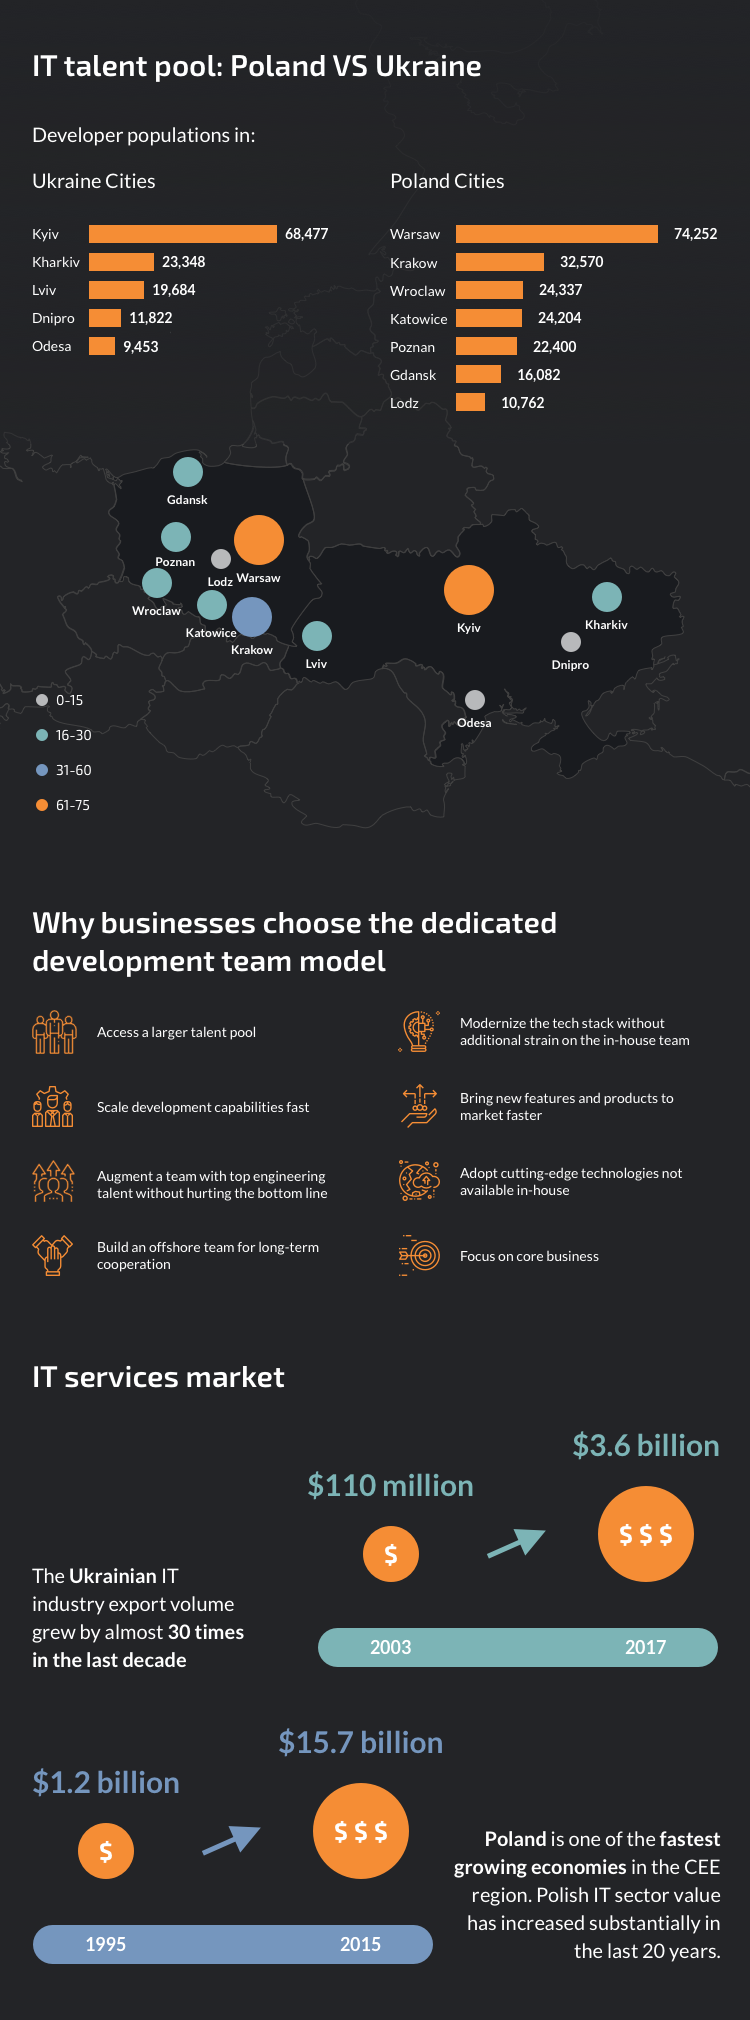 IT-talent-pool-poland-ukraine-infographic-plaza